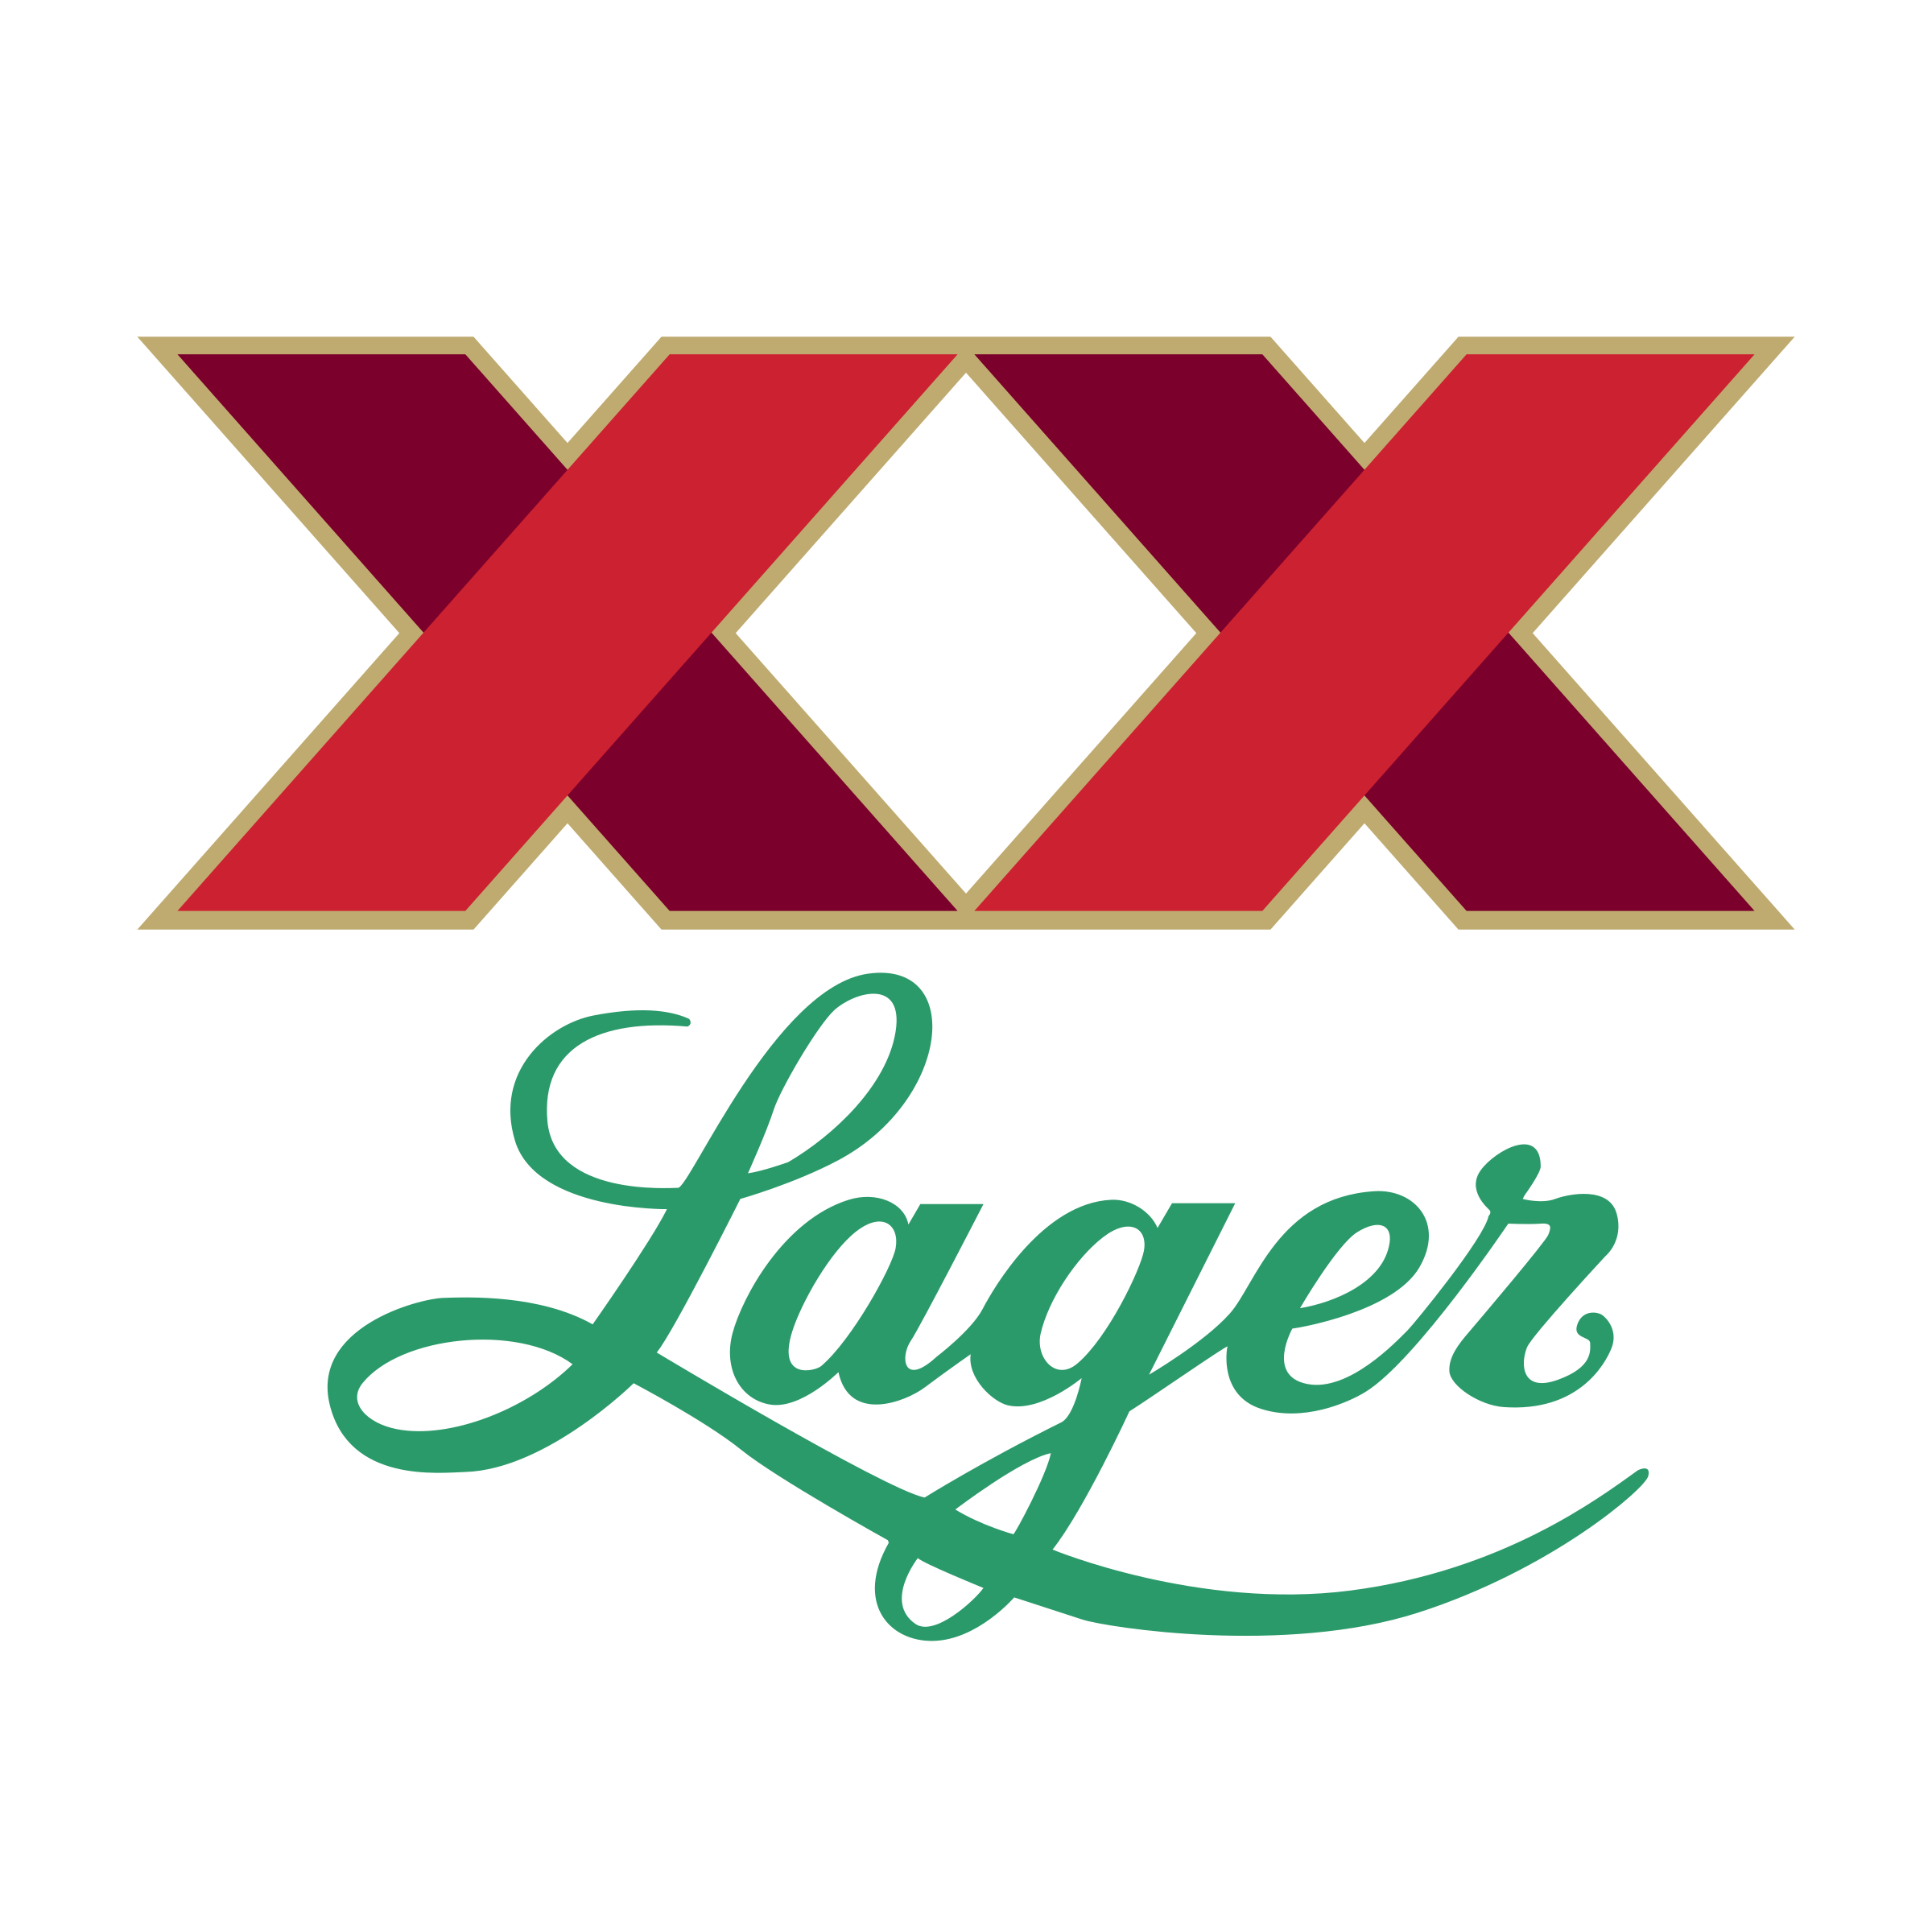 Lager Logo - XX Lager Logo PNG Transparent & SVG Vector - Freebie Supply